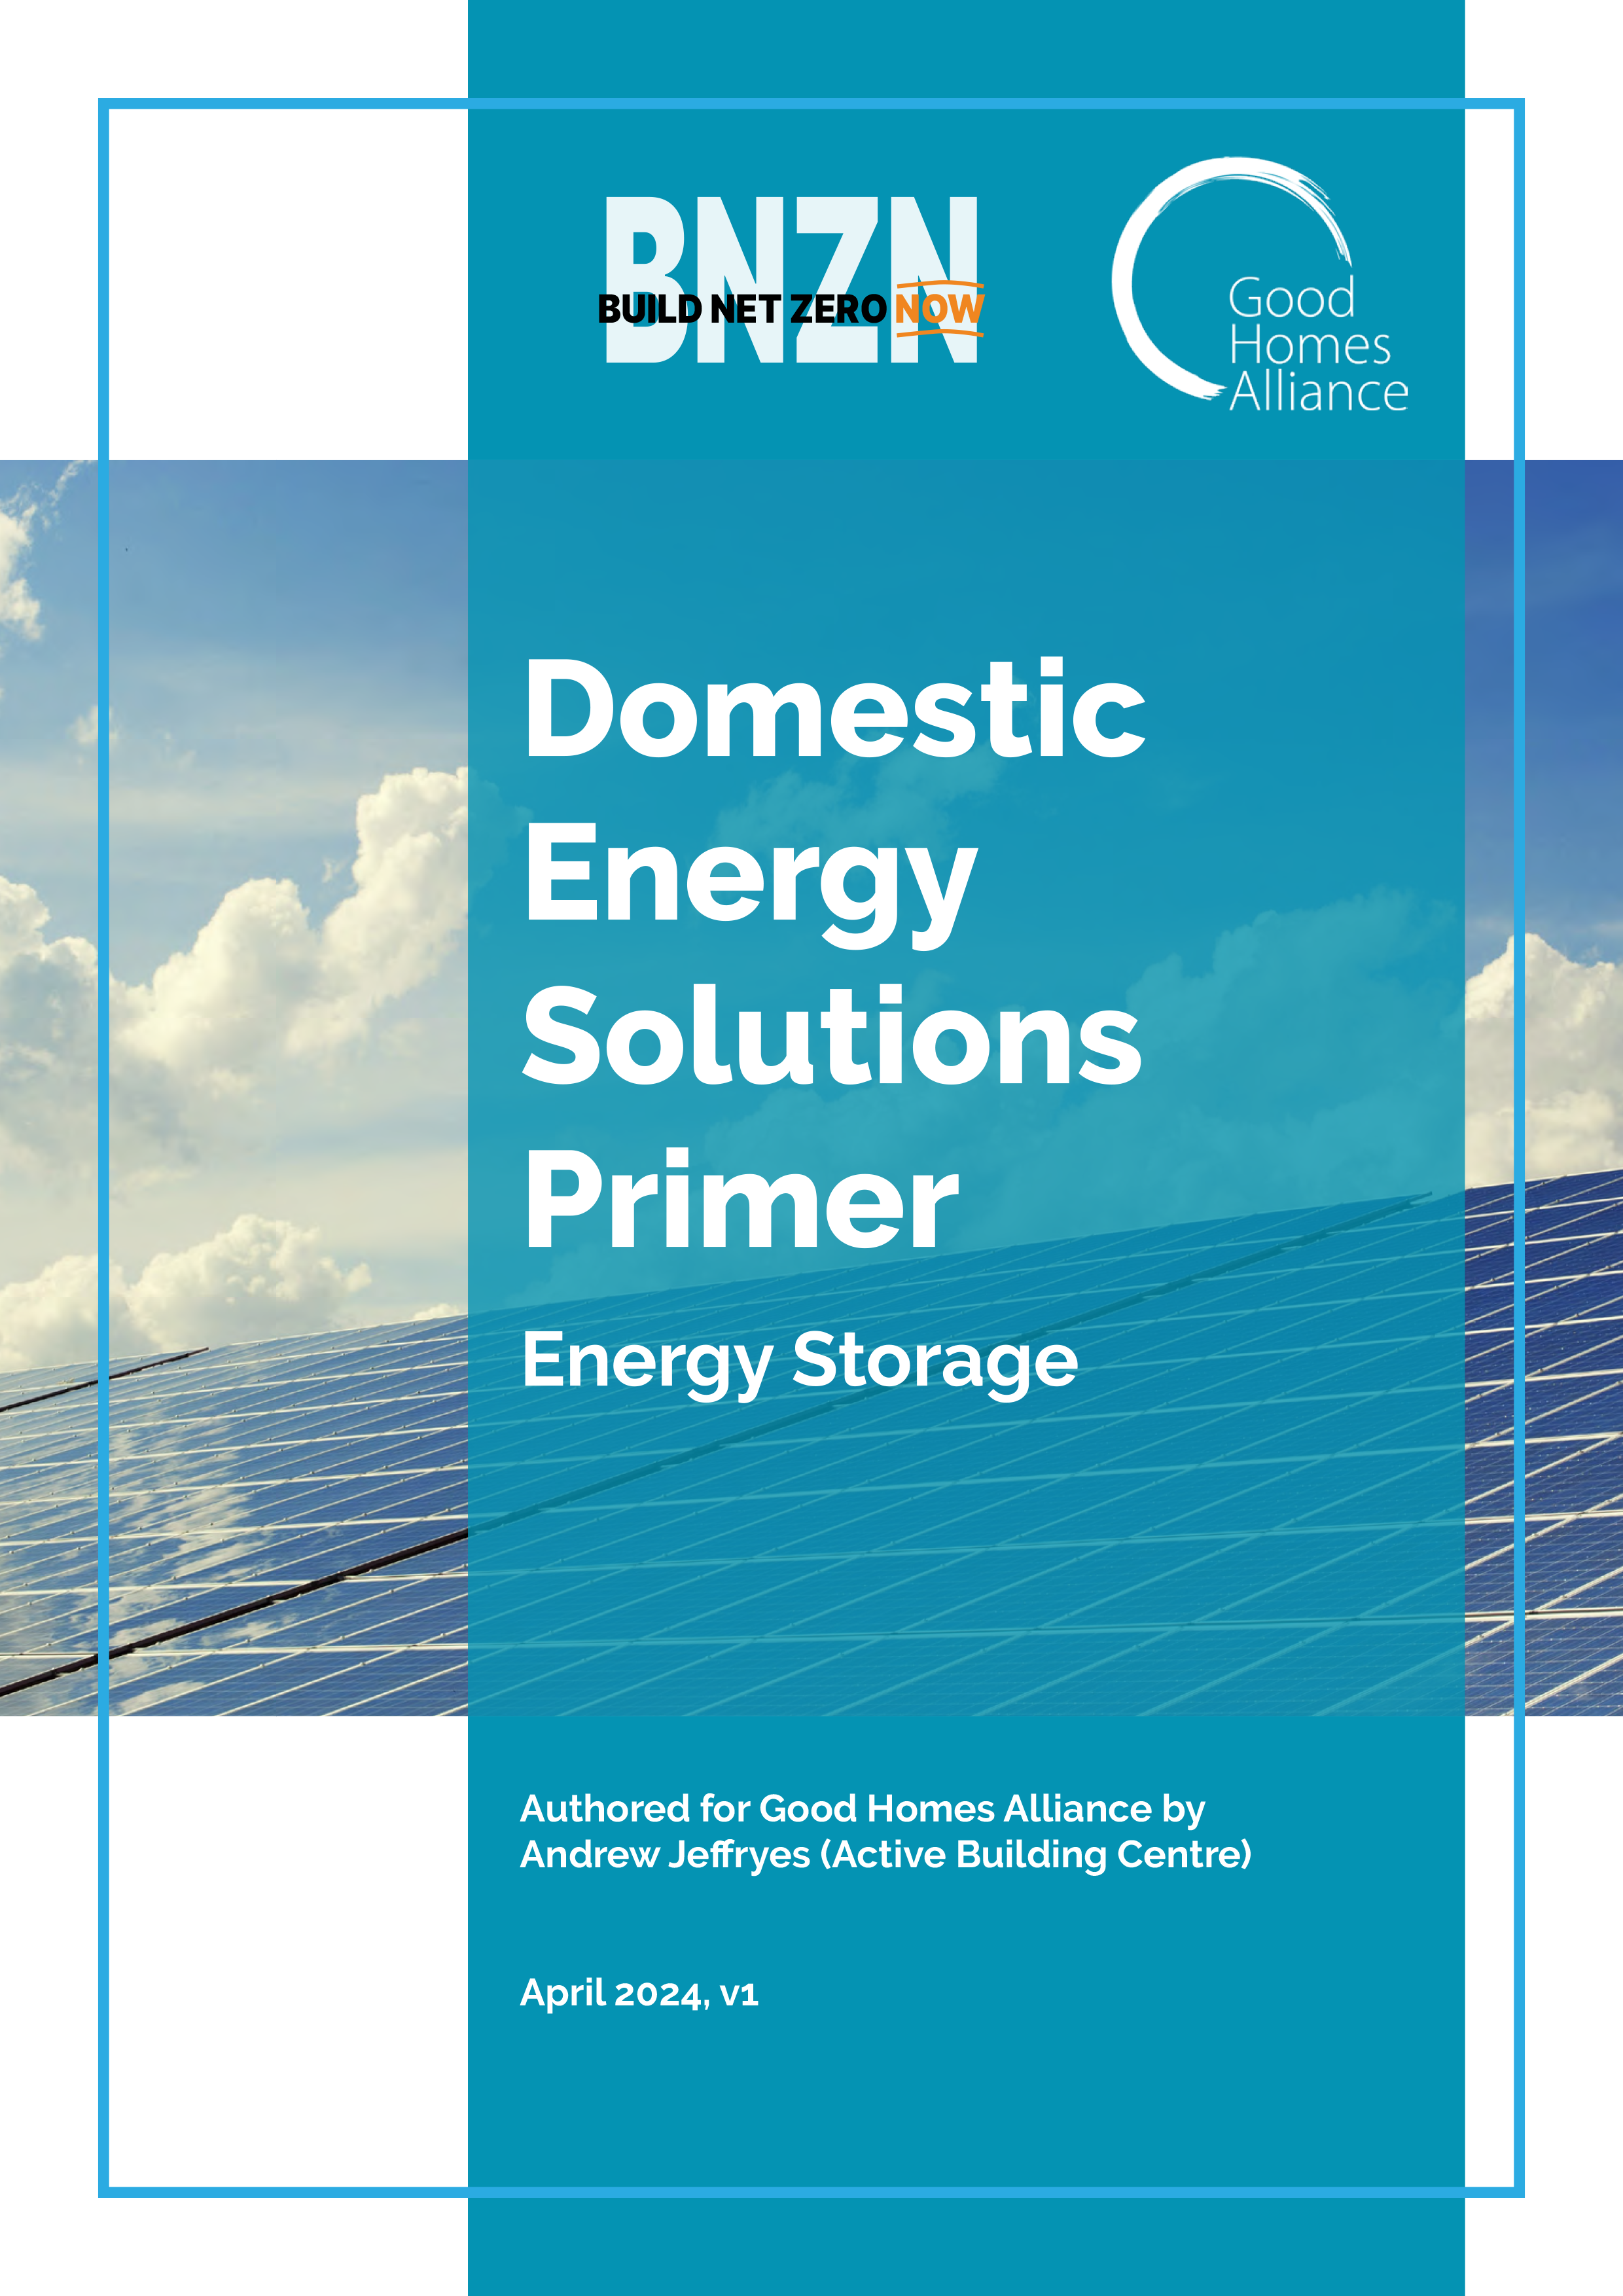 Domestic Energy Solutions Primer - Energy storage